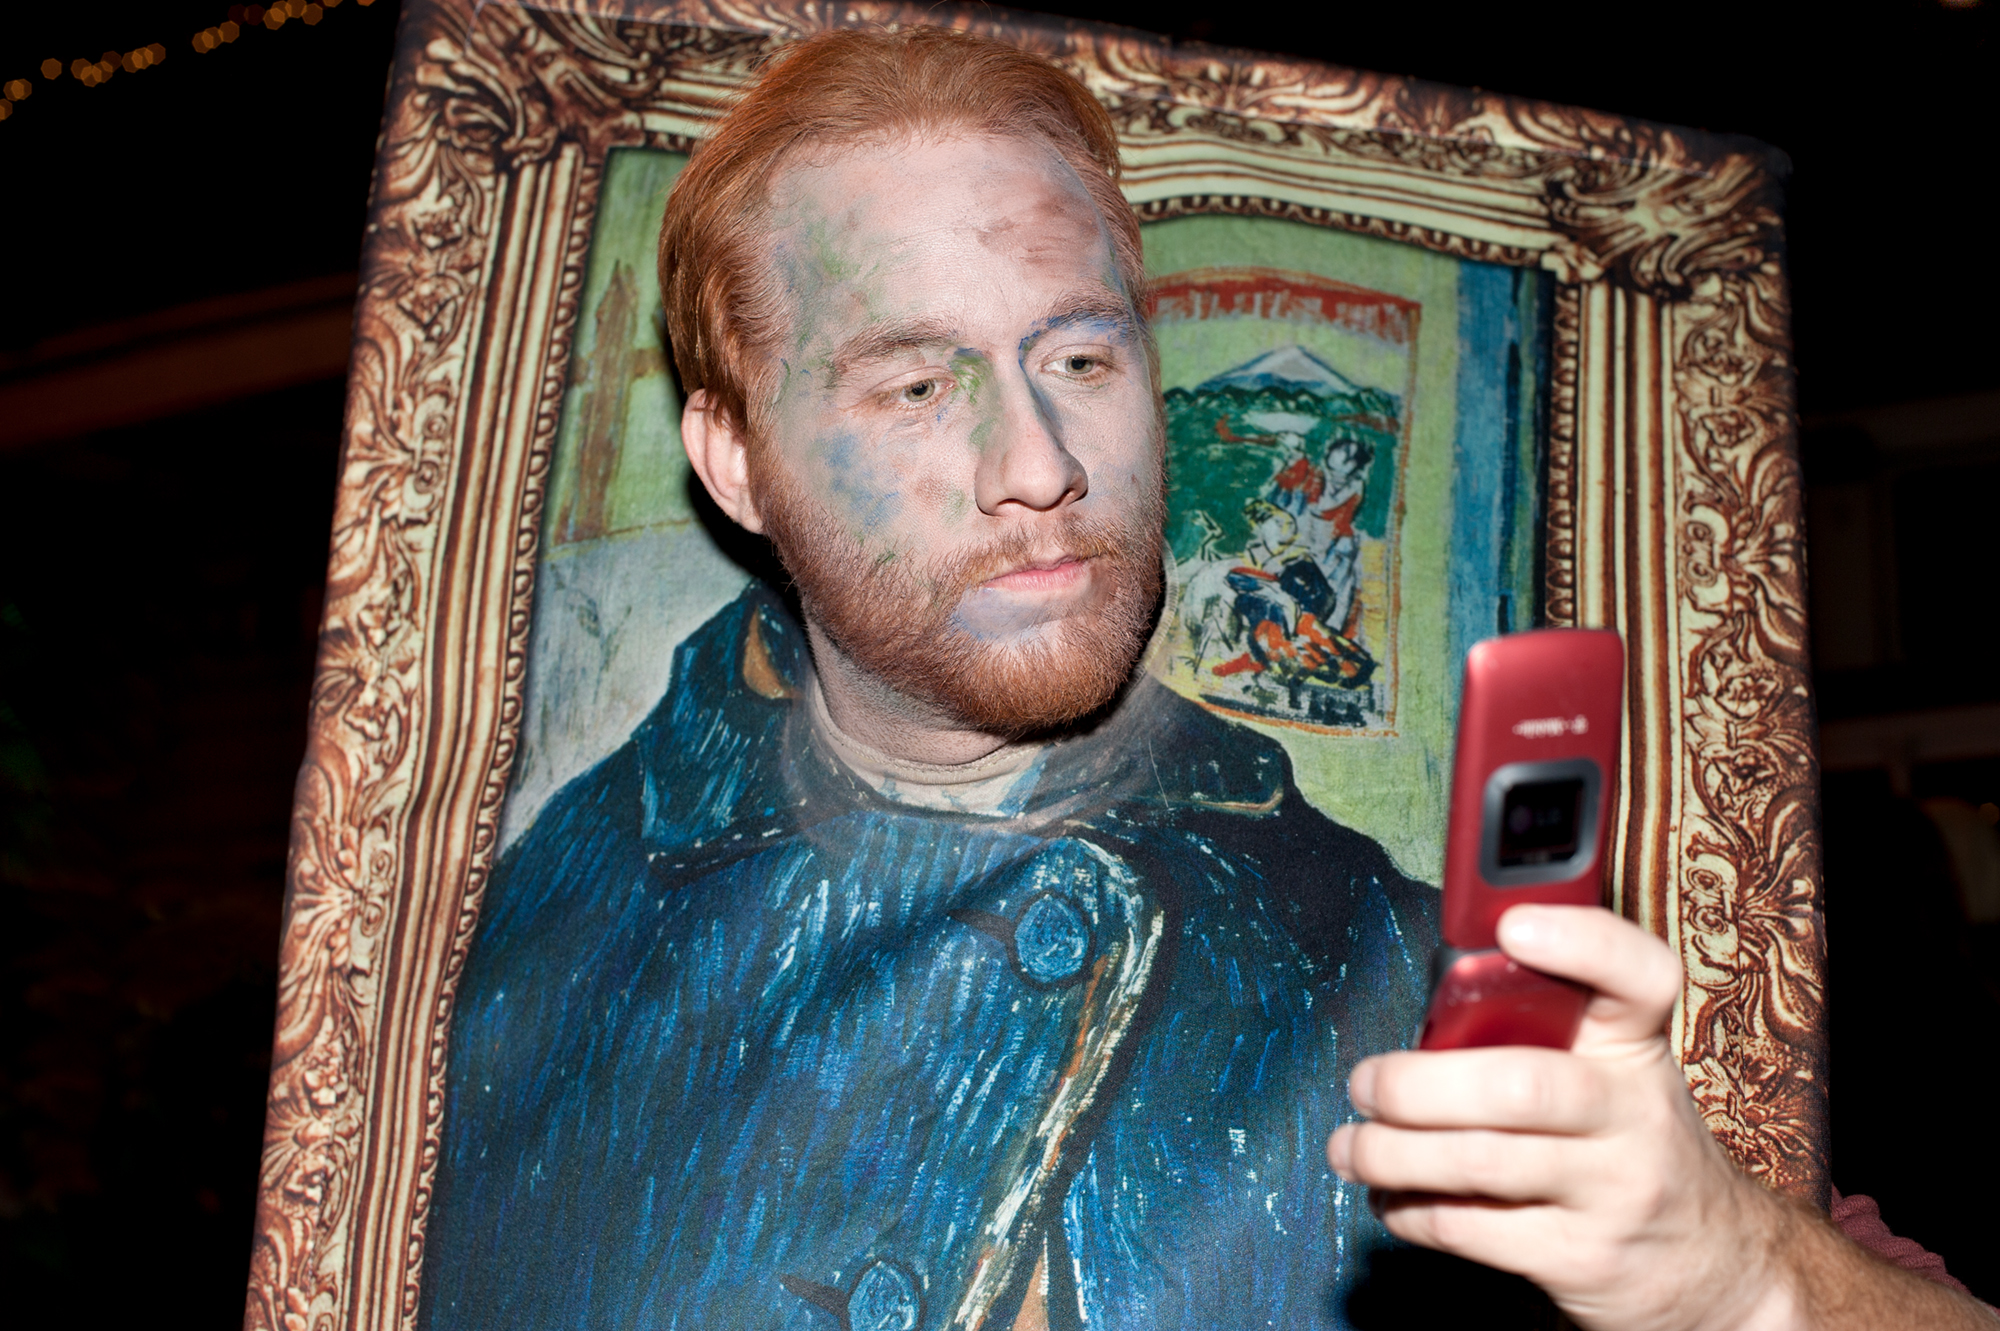 Lifestyle Photographer, Anita Nowacka, portrait of a man posing as Vincent van Gogh